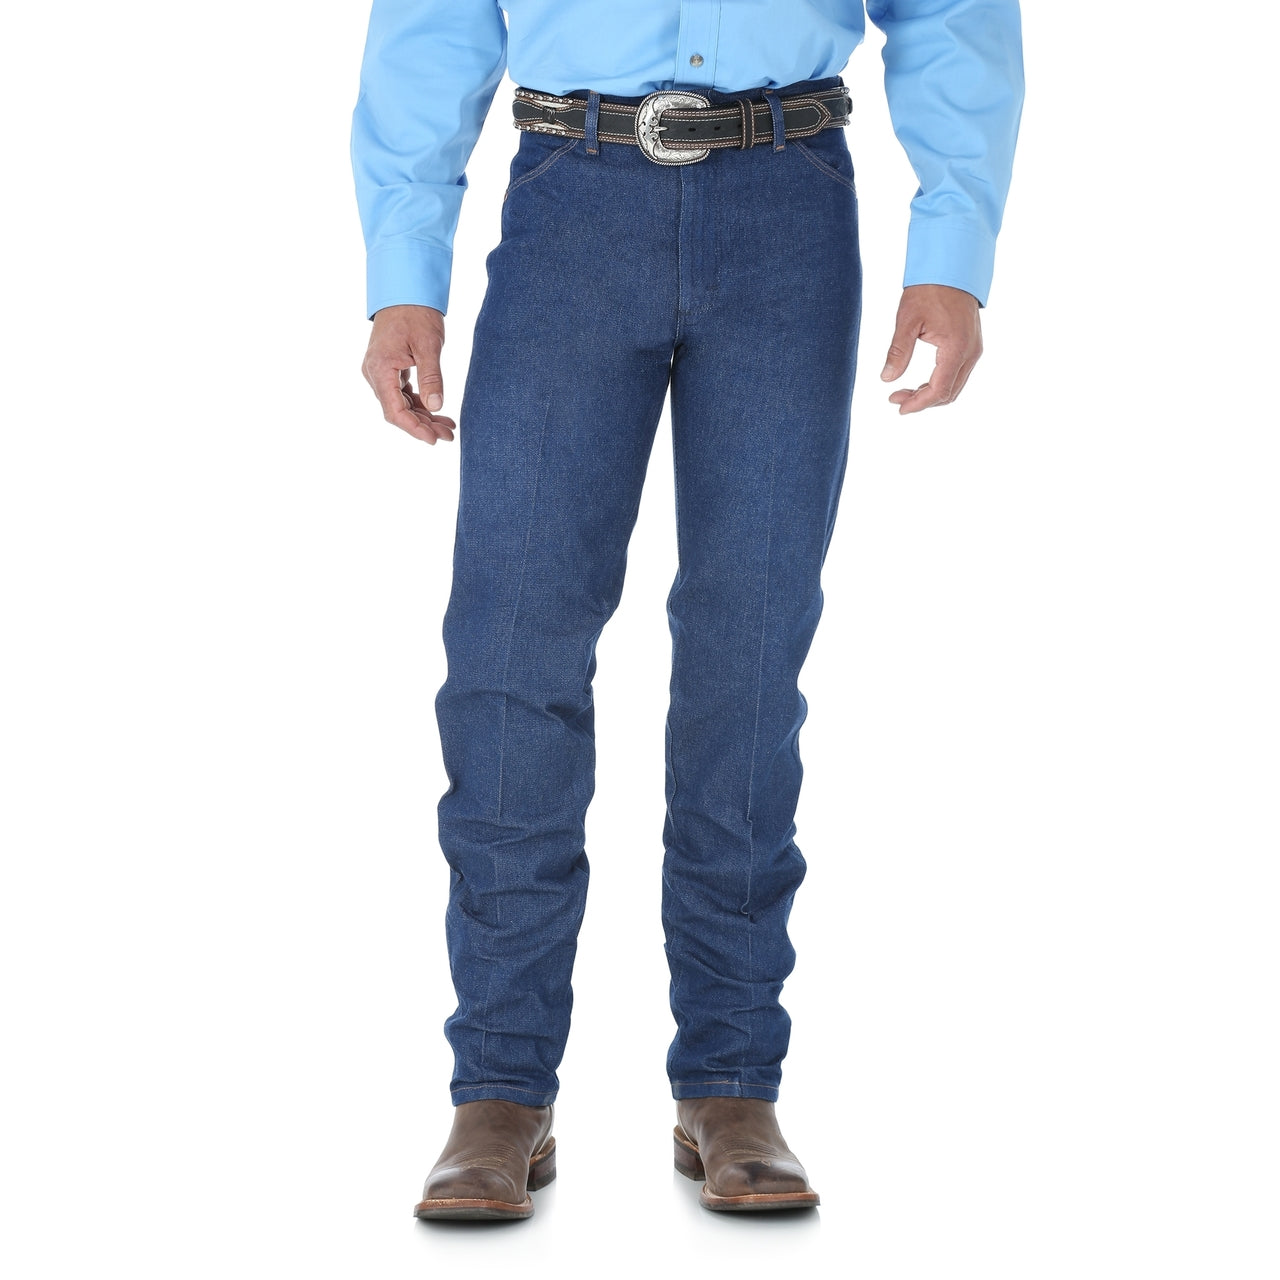 Wrangler Original Fit Cowboy Cut Jeans